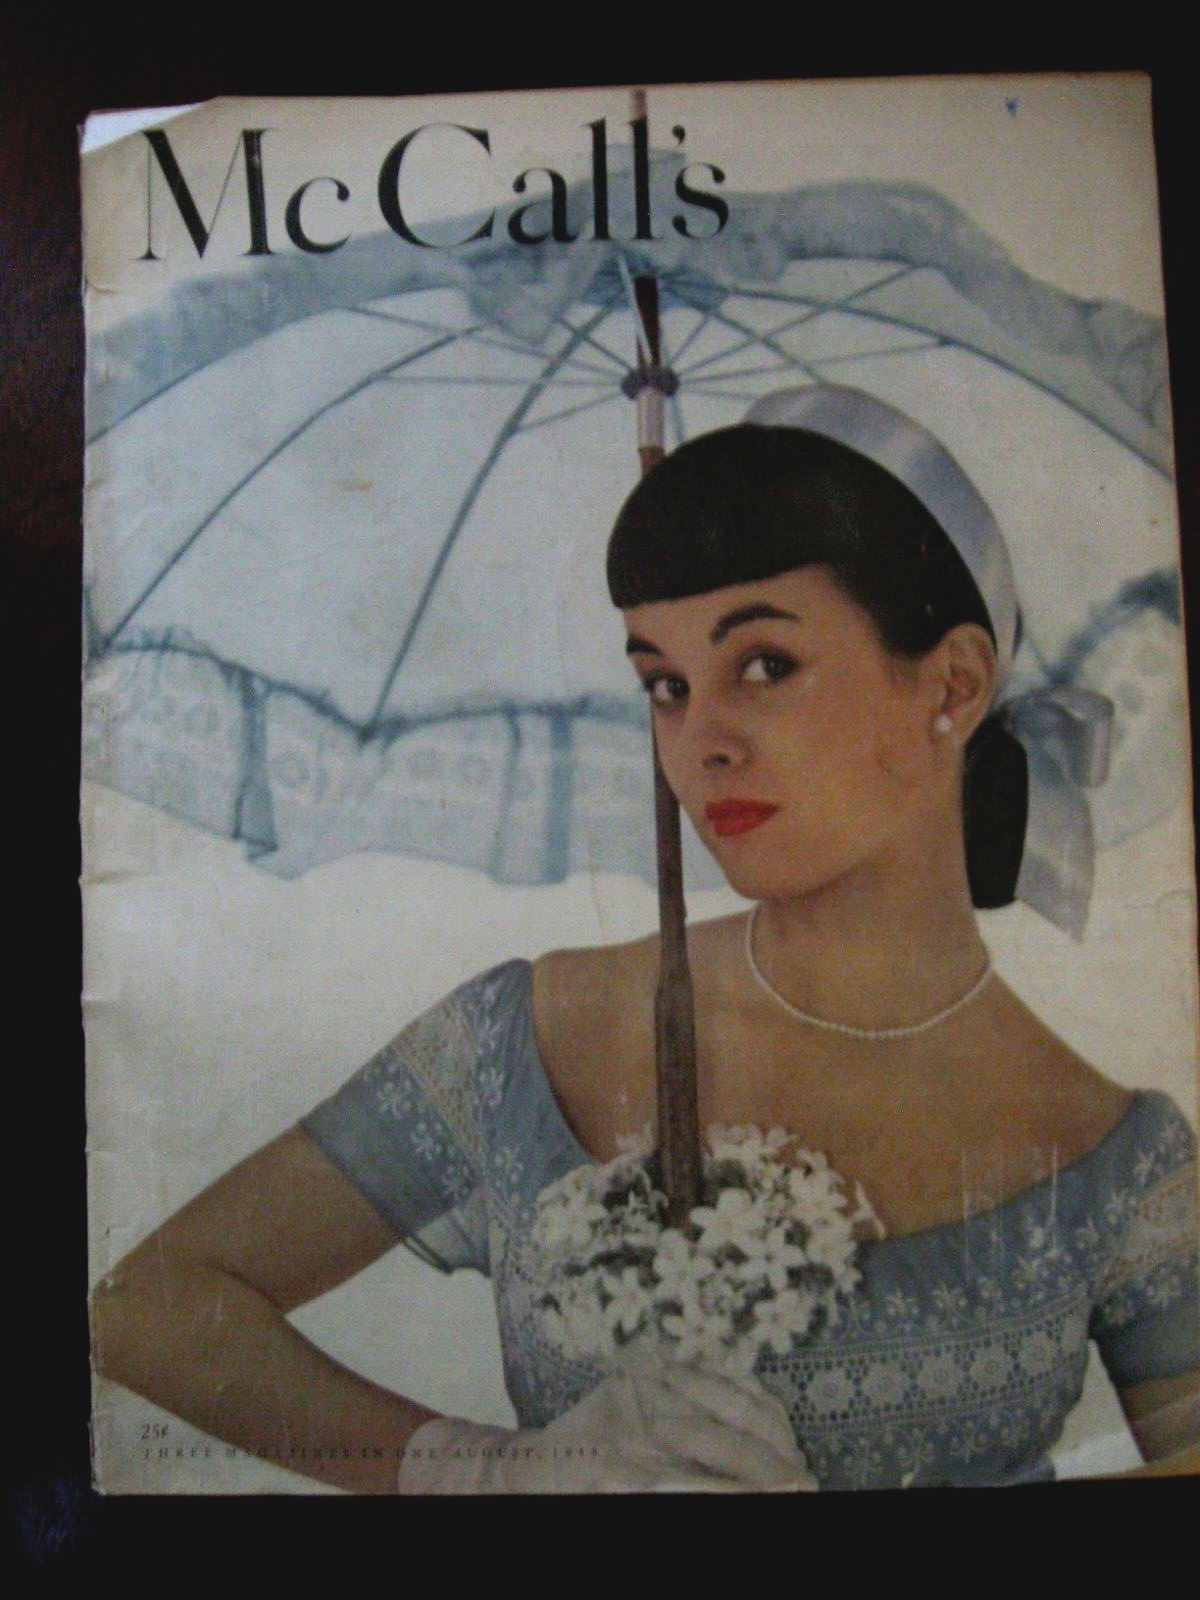 McCall\'s 1948 August Magazine Vintage Fashion Advertising Vivid Graphics & Art